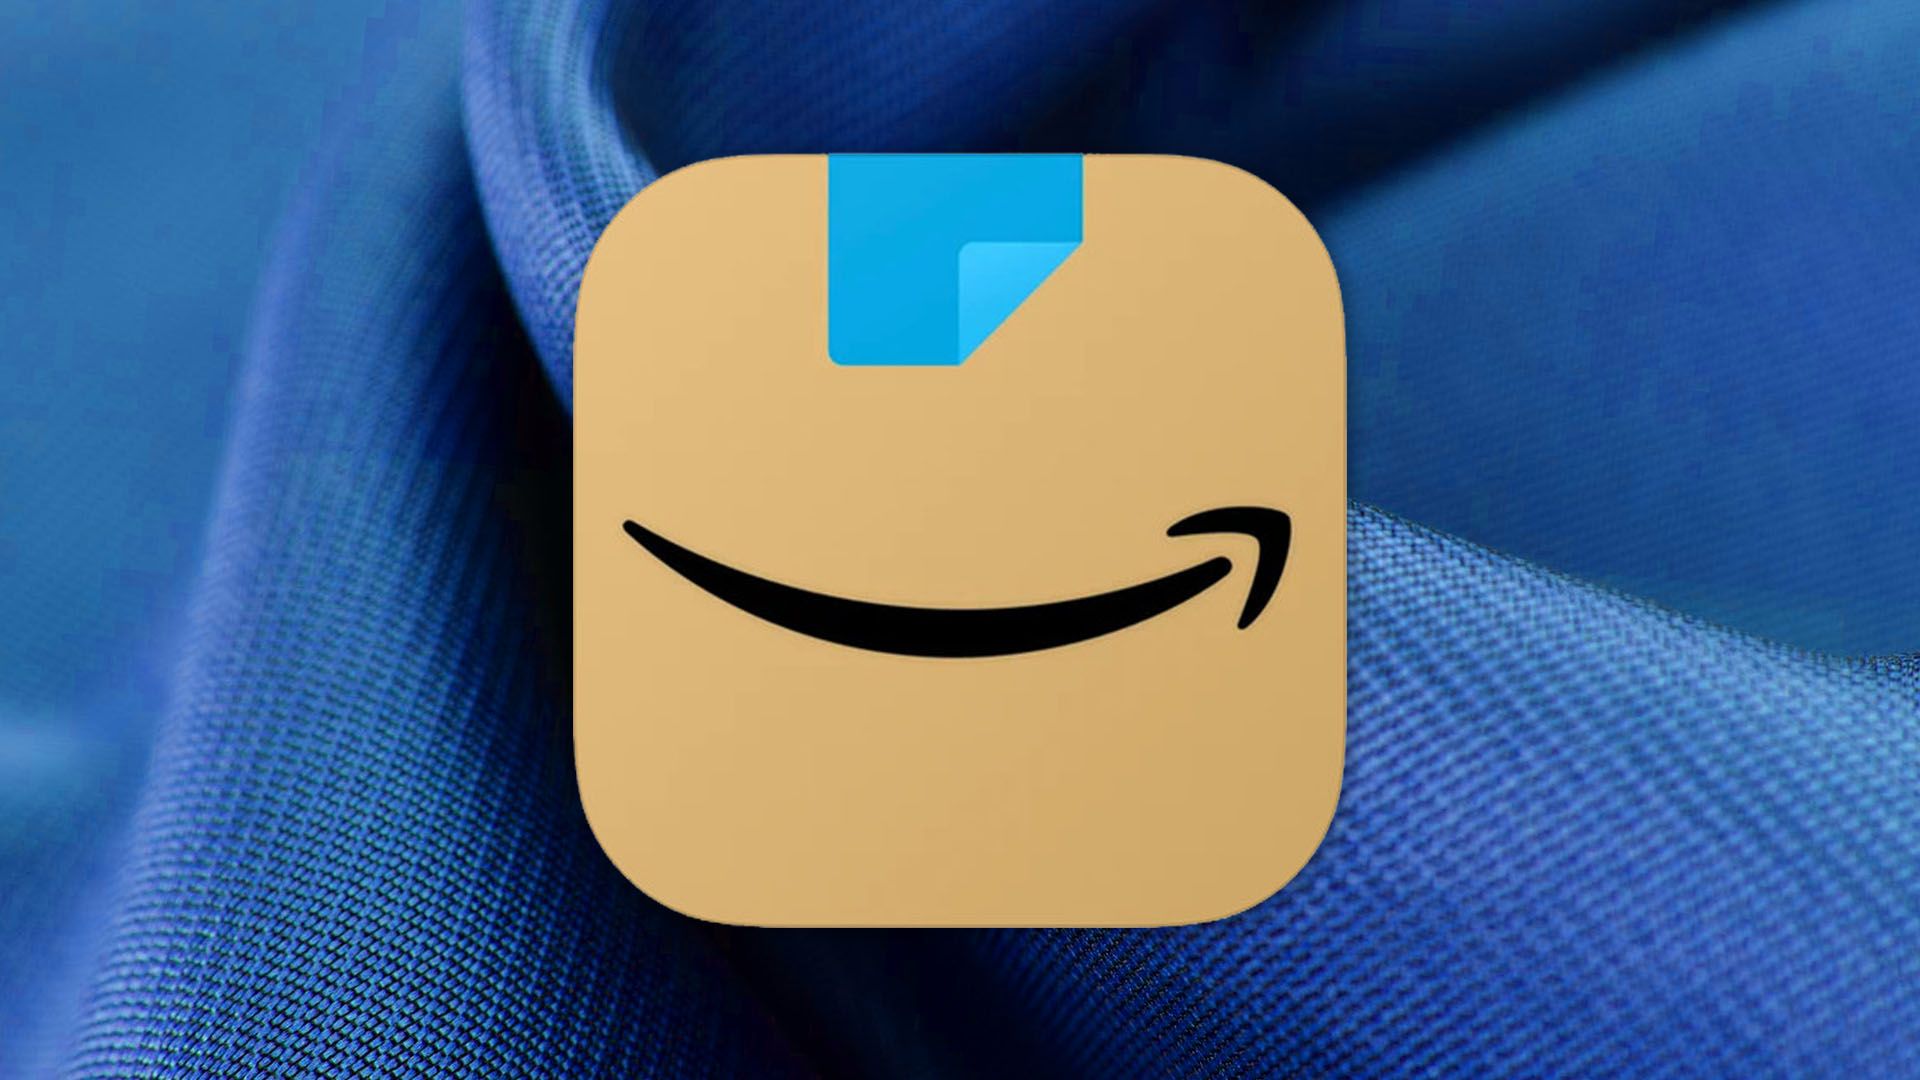 Amazon shipping logo against blue fabric.